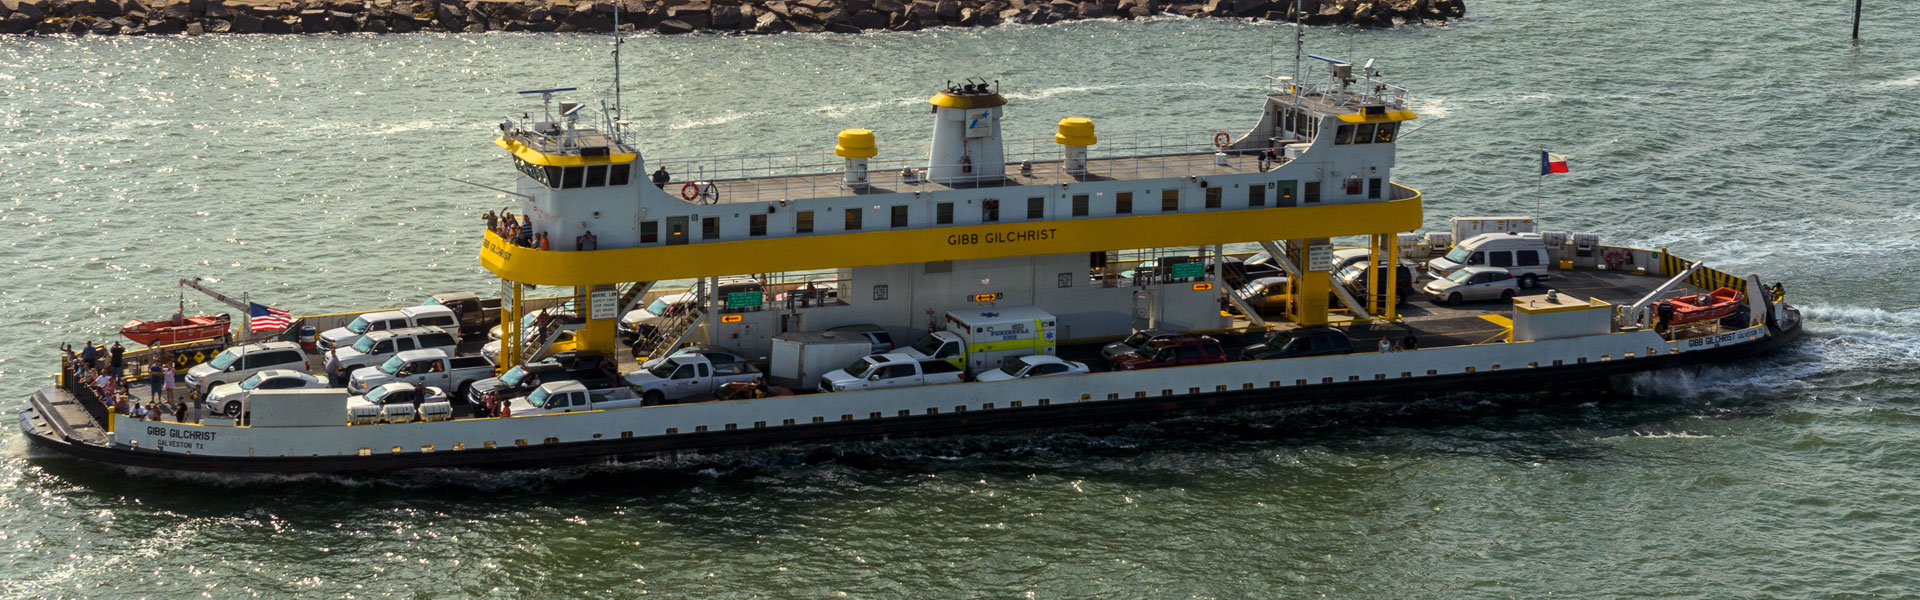 Galveston - Port Bolivar Ferry, Galveston, TX